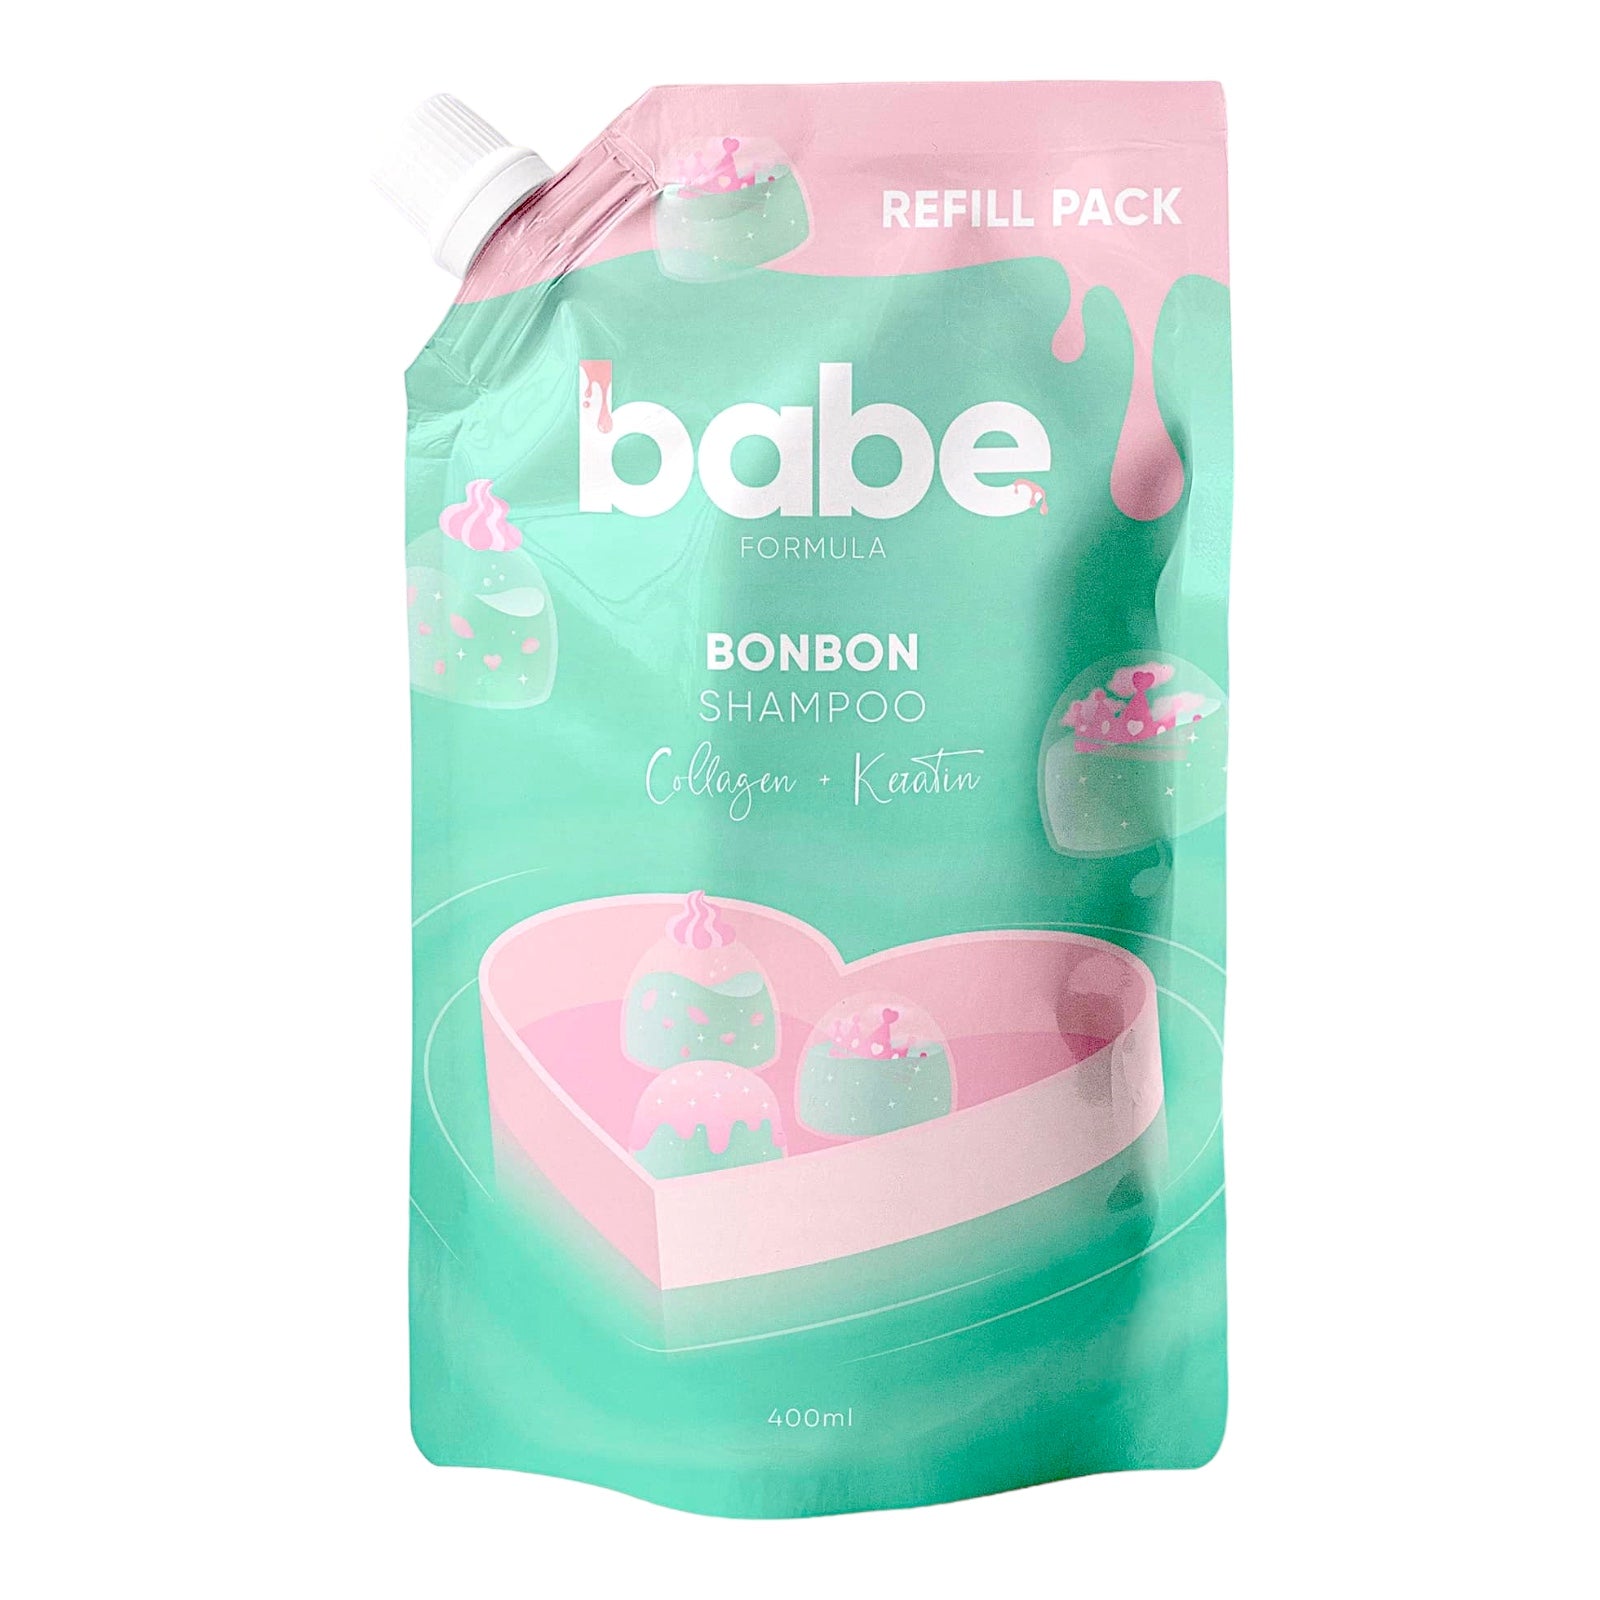 Babe Formula - BONBON SHAMPOO - Refill Pack 400 ml – My Care Kits